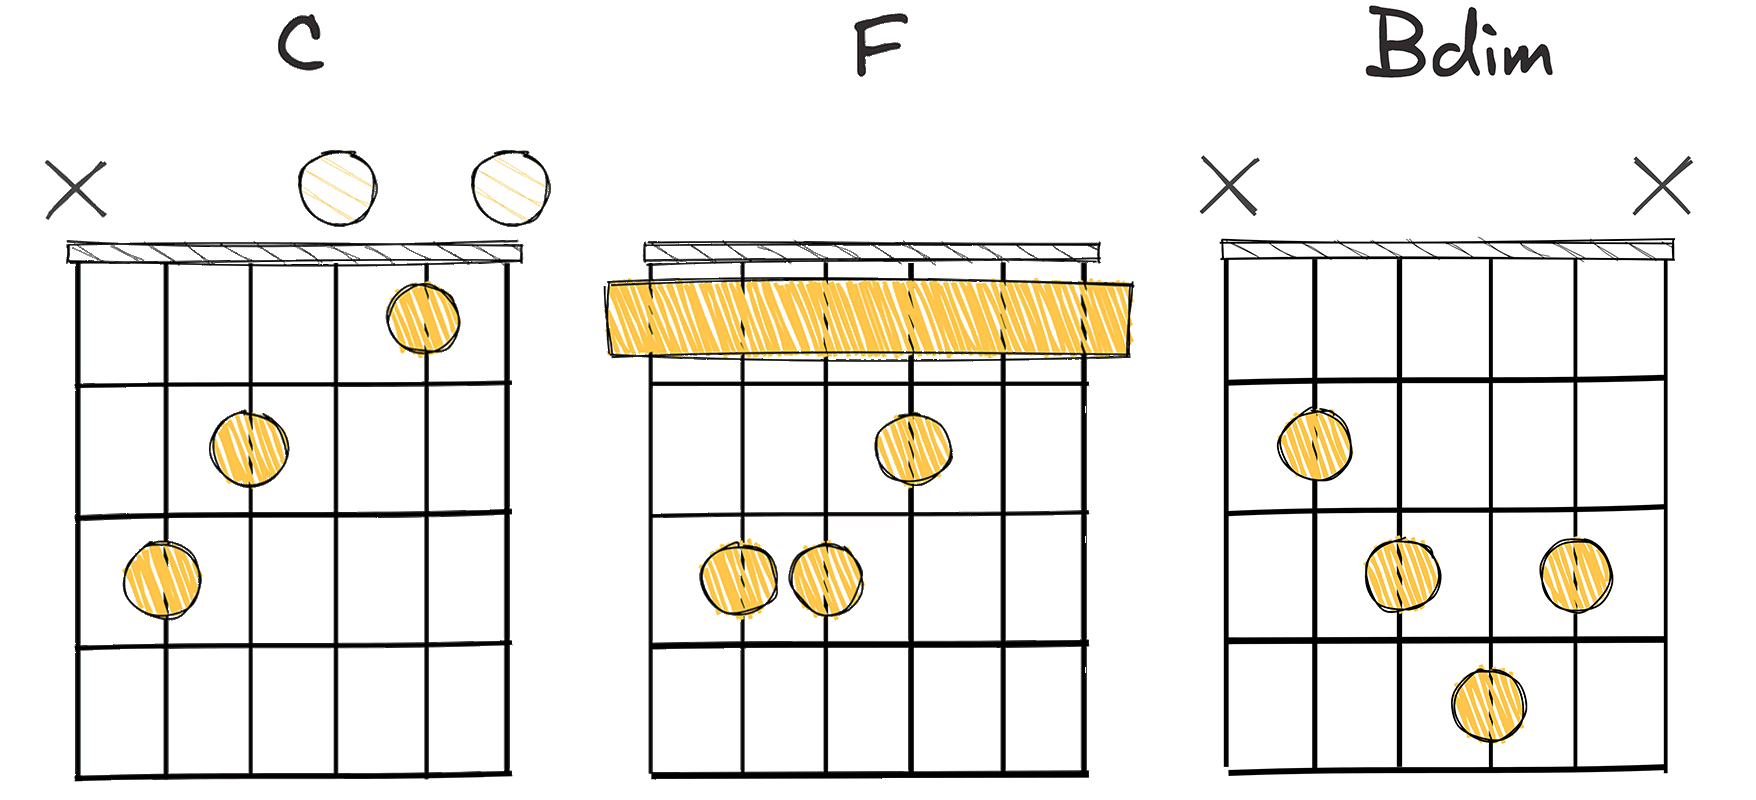 I - Iv - vii (1 - 4 - 7) chords diagram